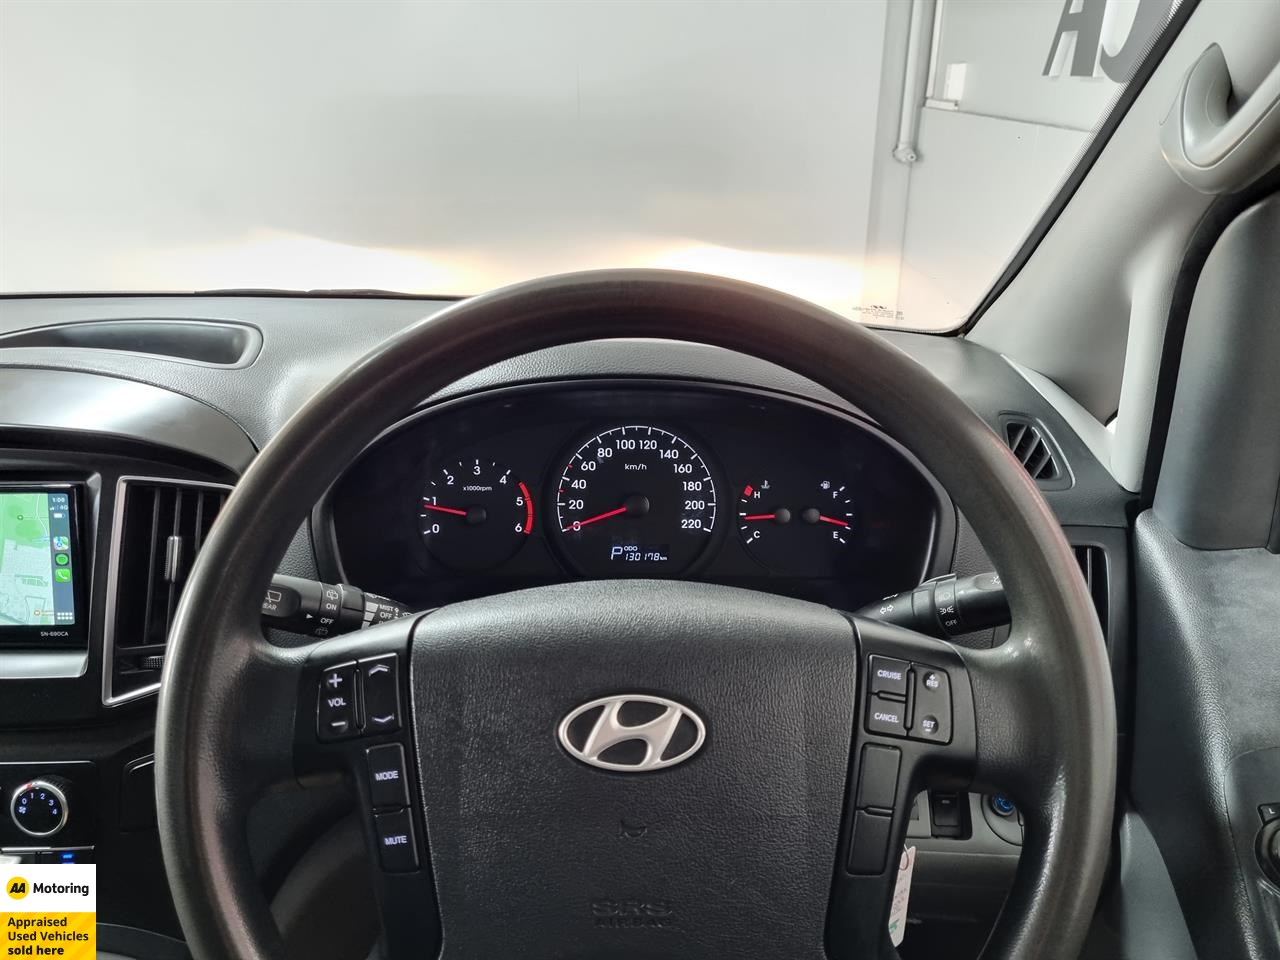 2016 Hyundai iLoad